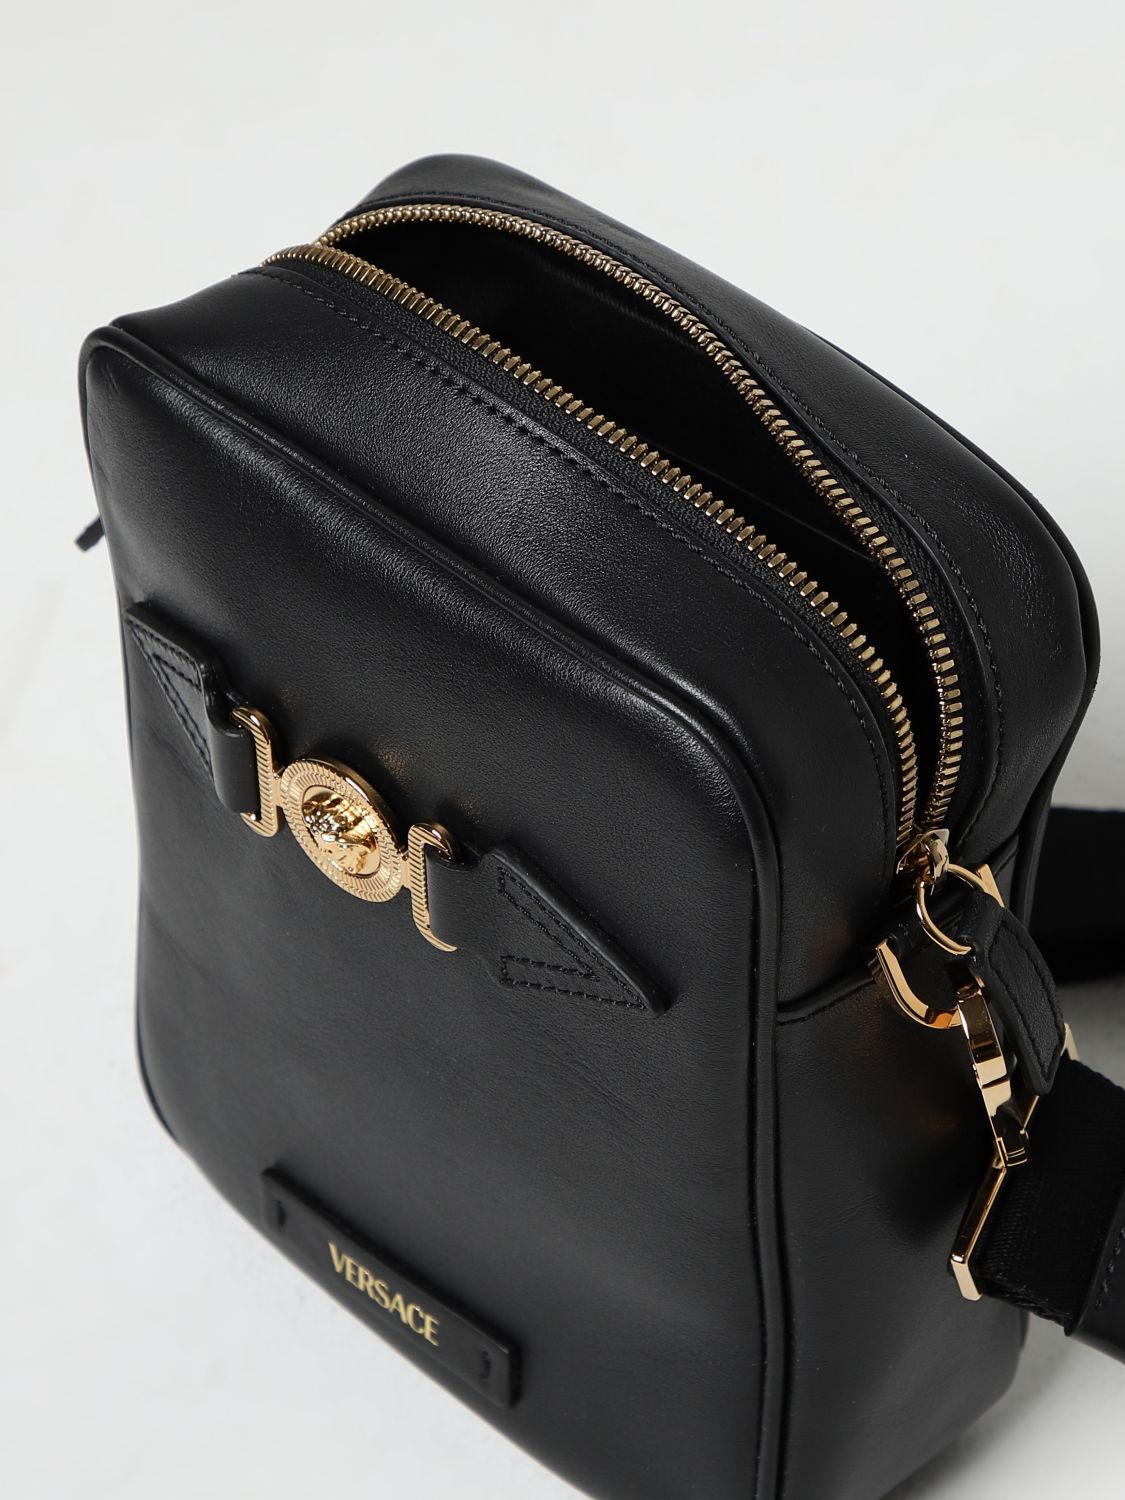 Men's Versace Bags & Backpacks | Nordstrom